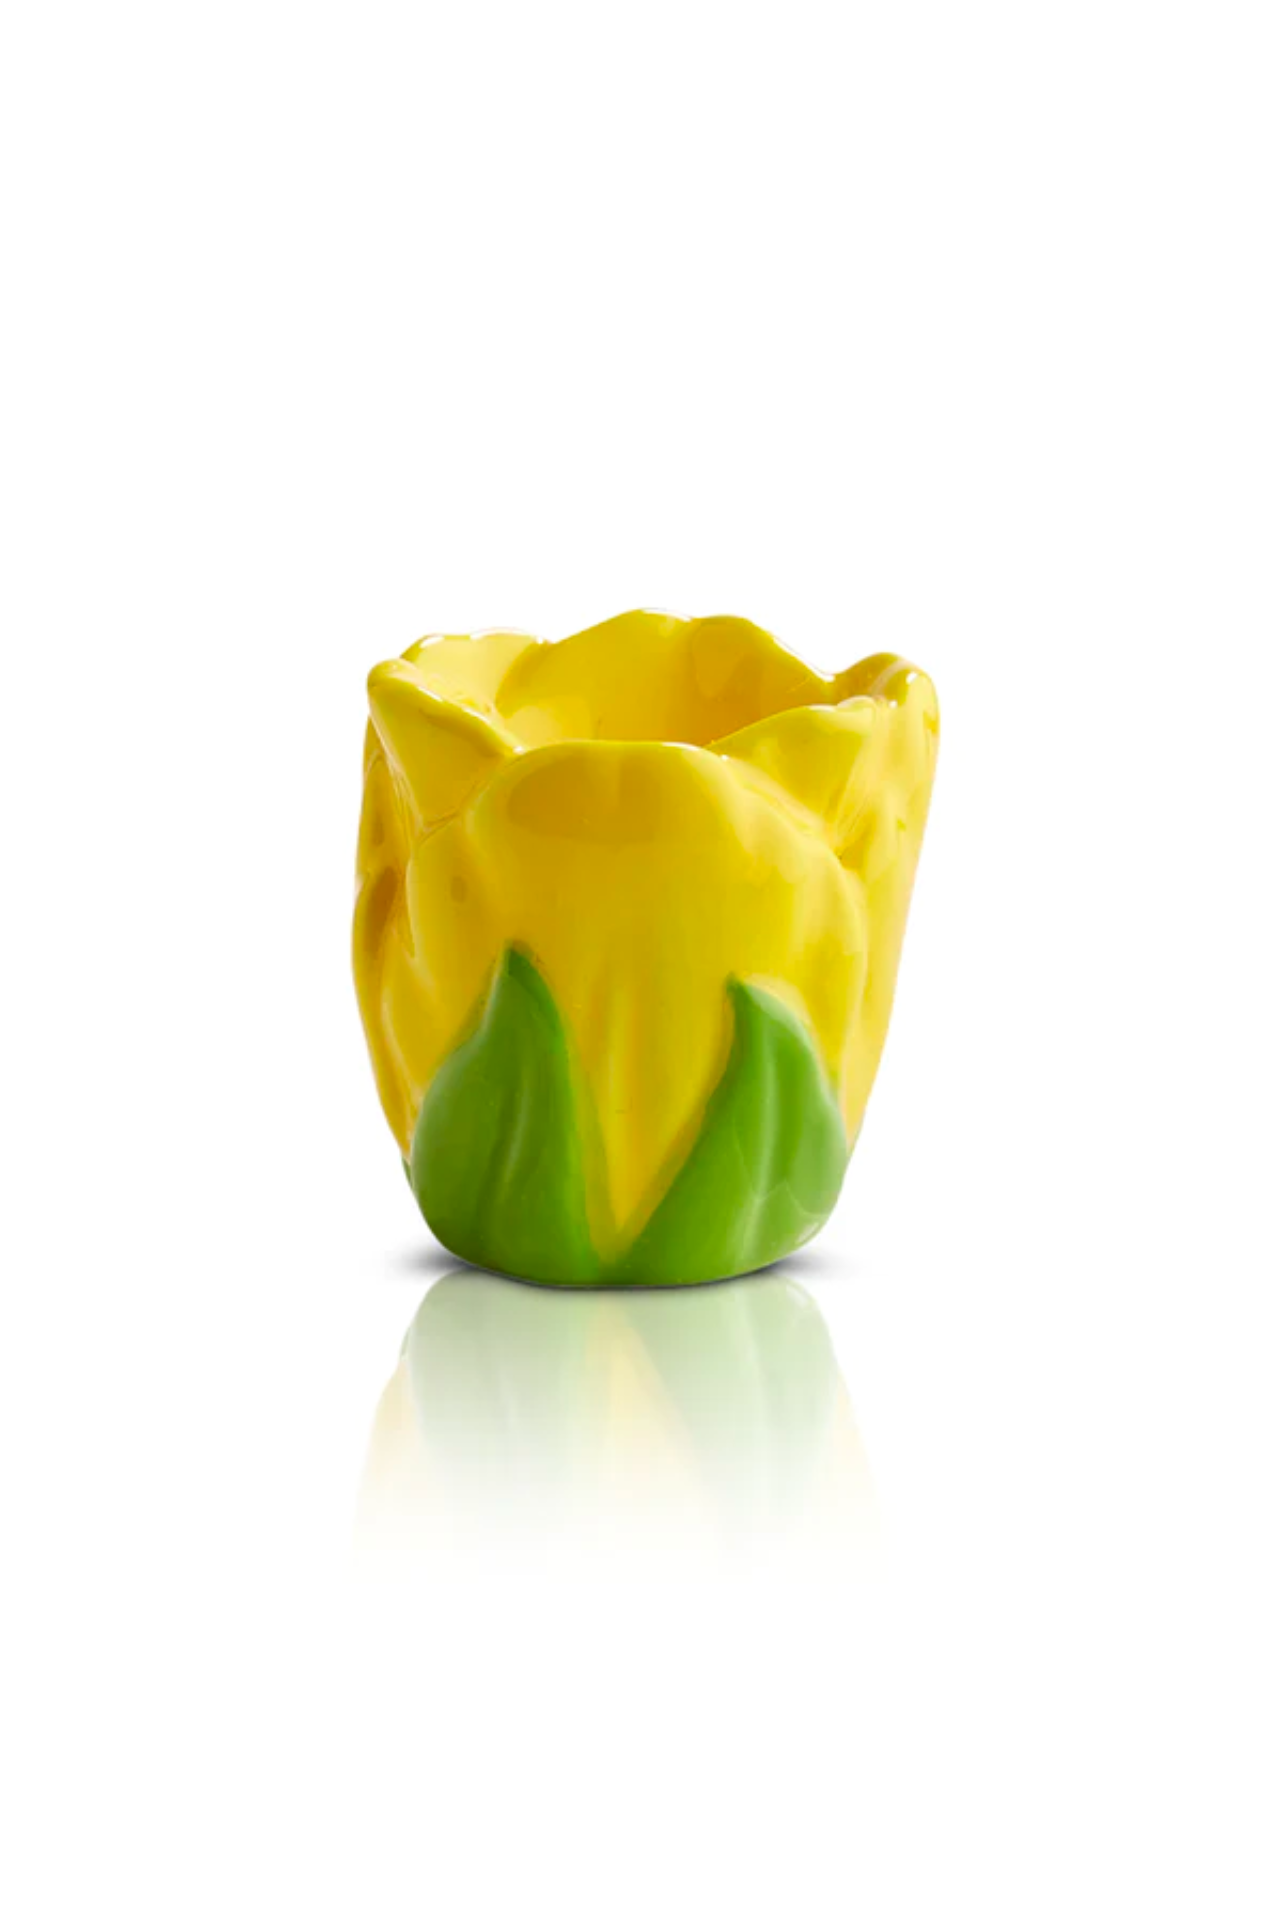 tiptoe thru 'em (yellow tulip)